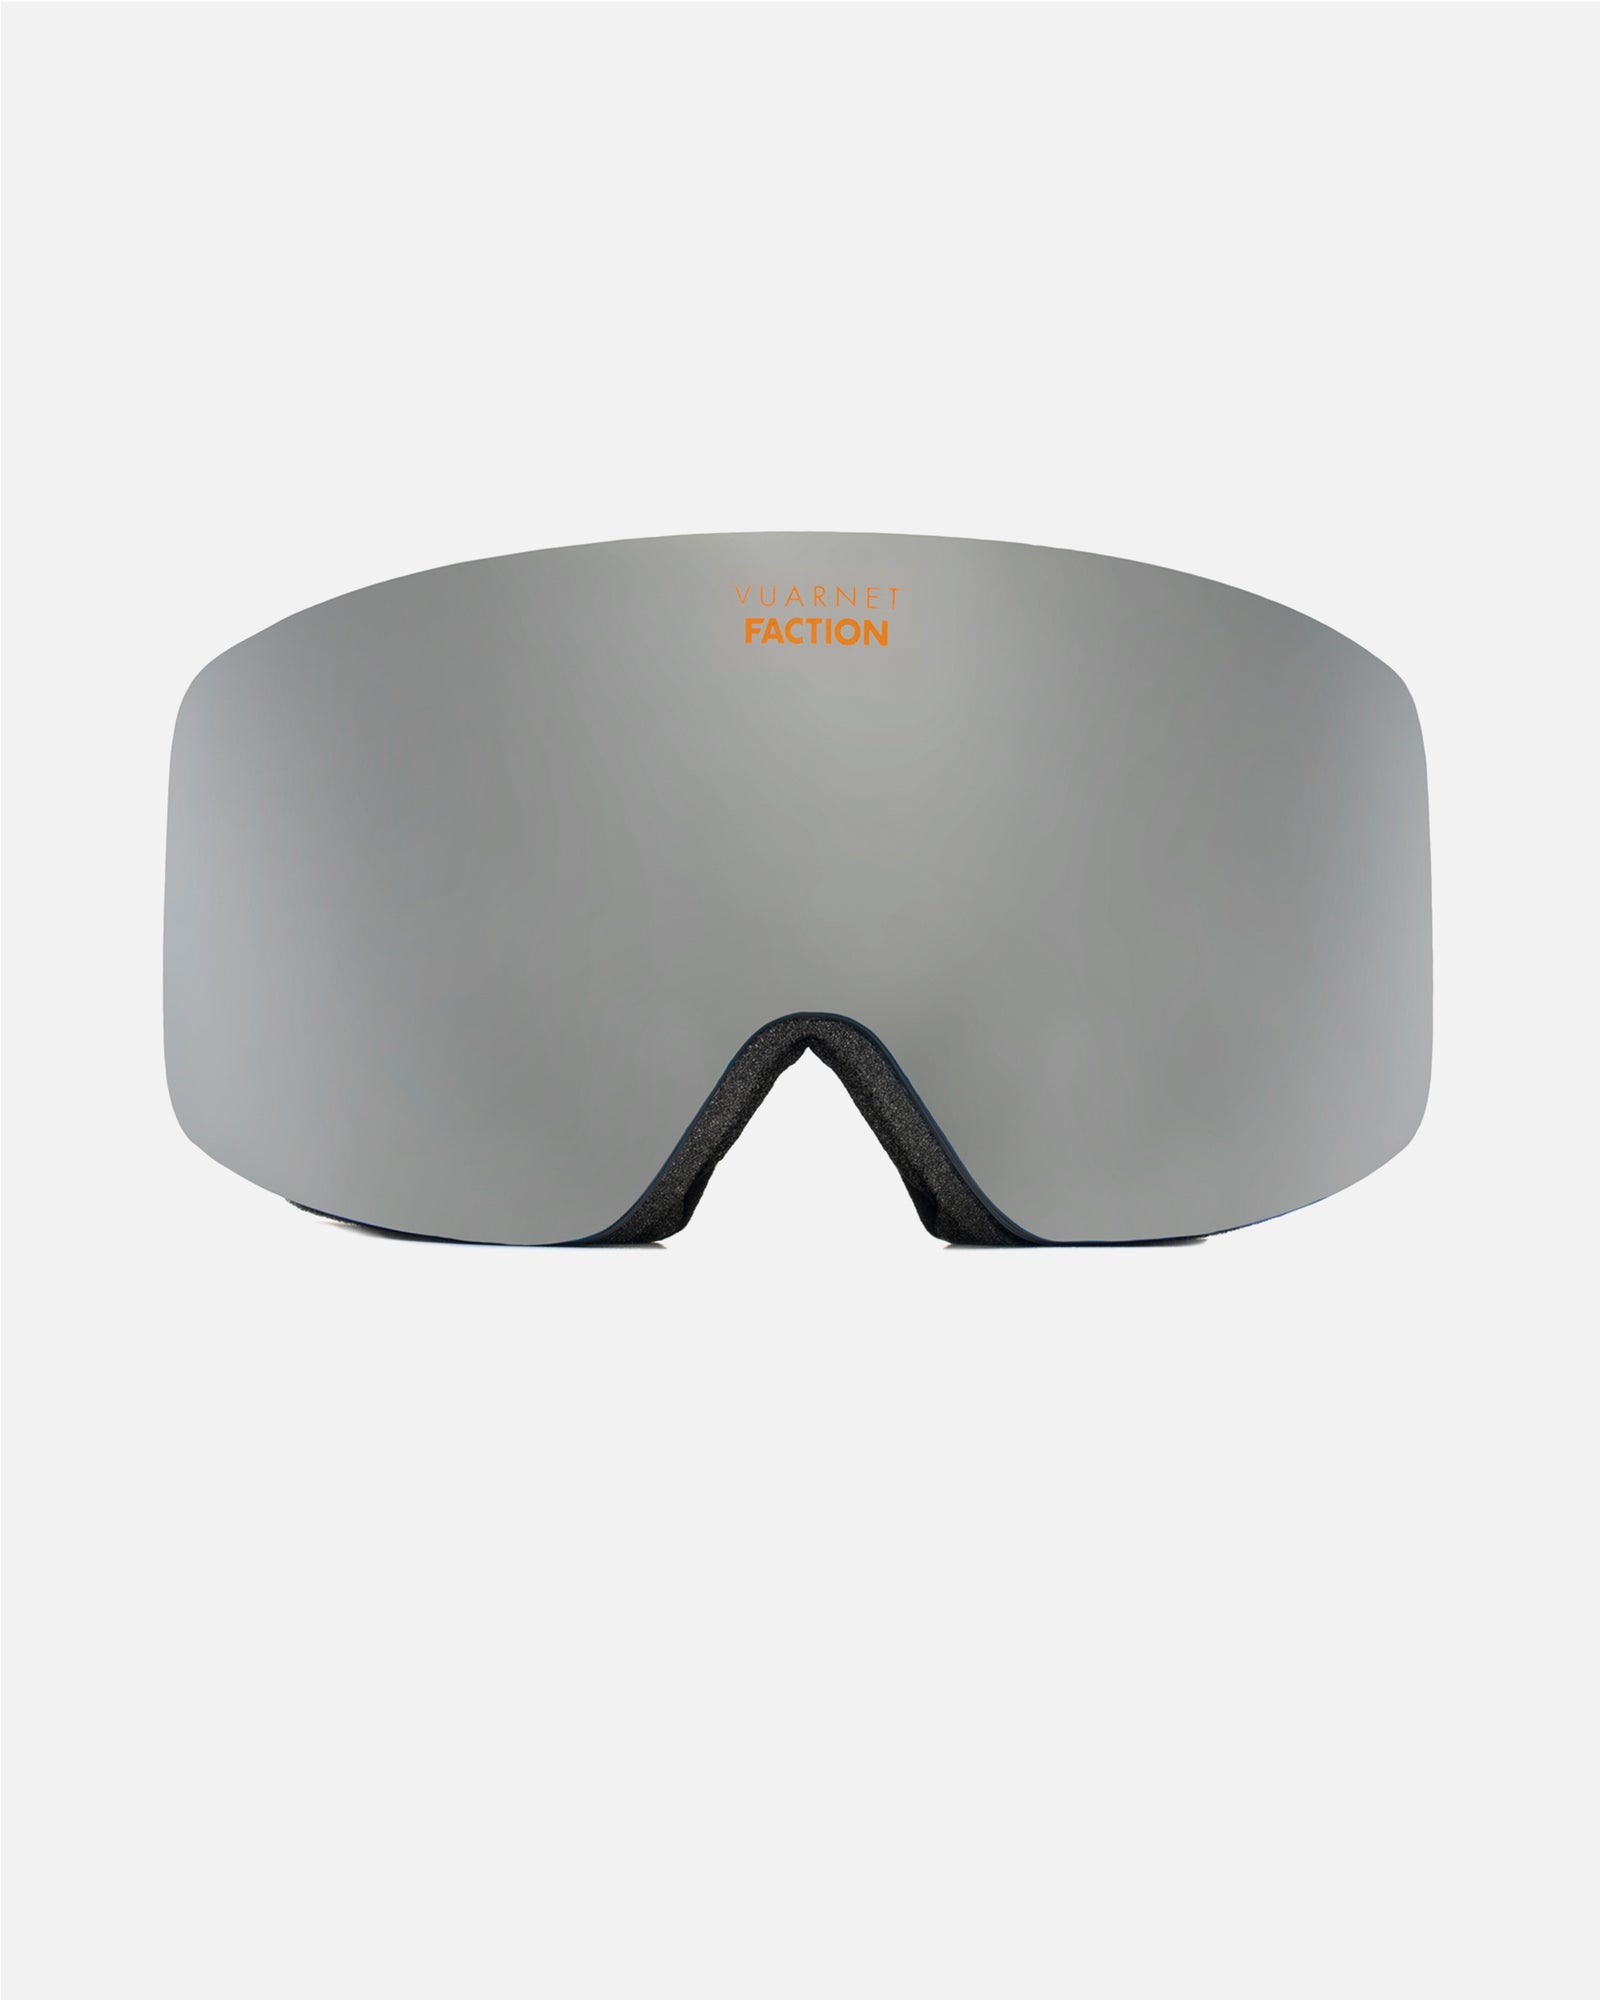 Ski Goggles in Ski Equipment 